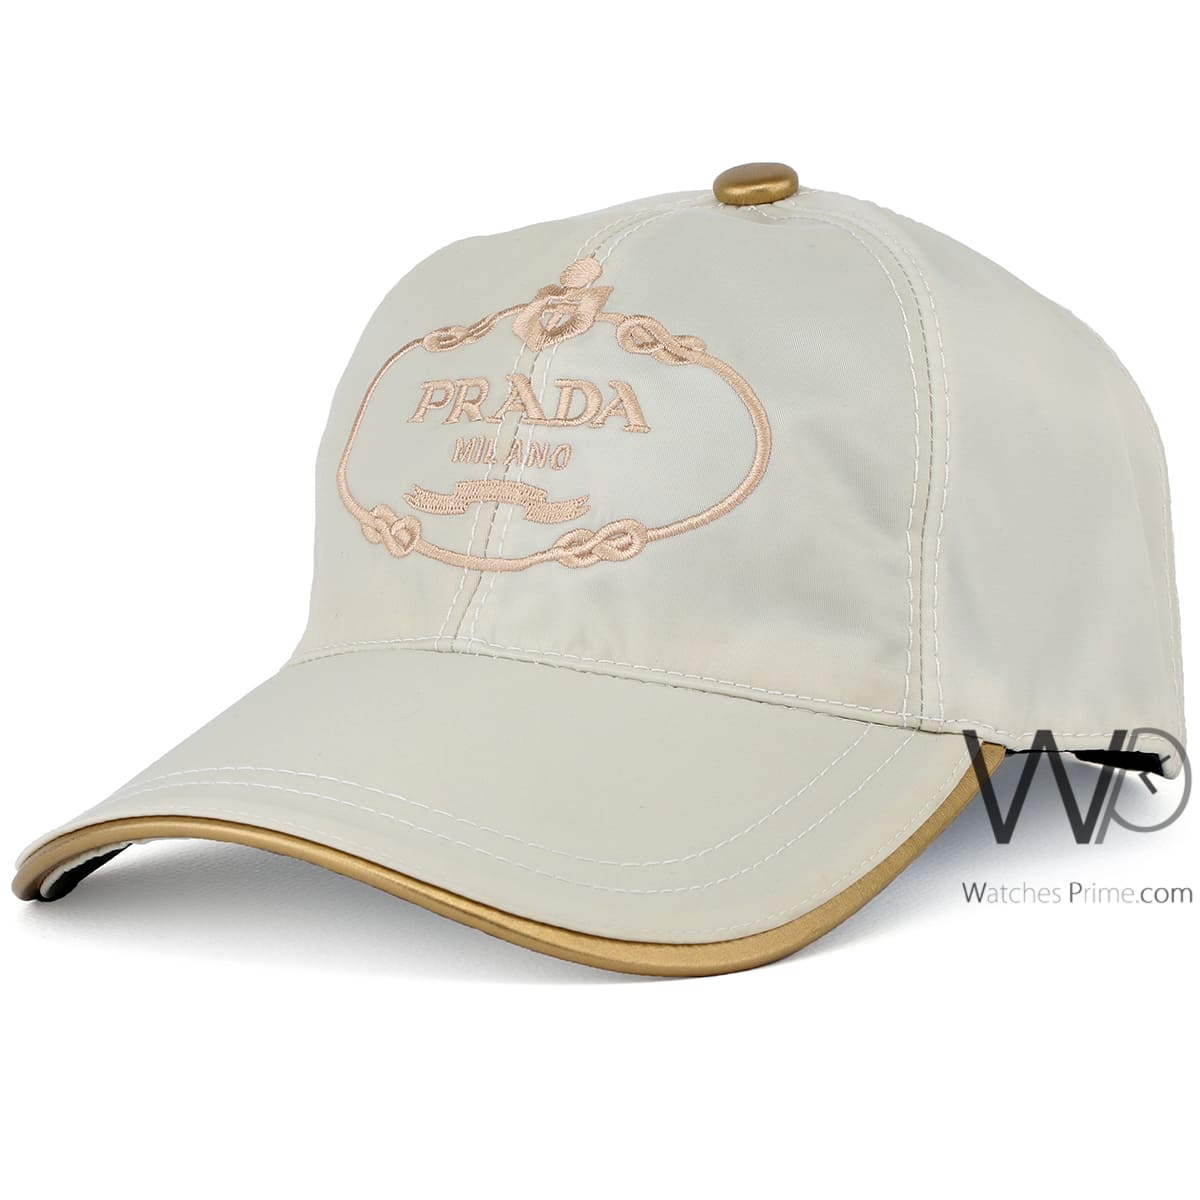 Prada Beige baseball Hat for men | Watches Prime